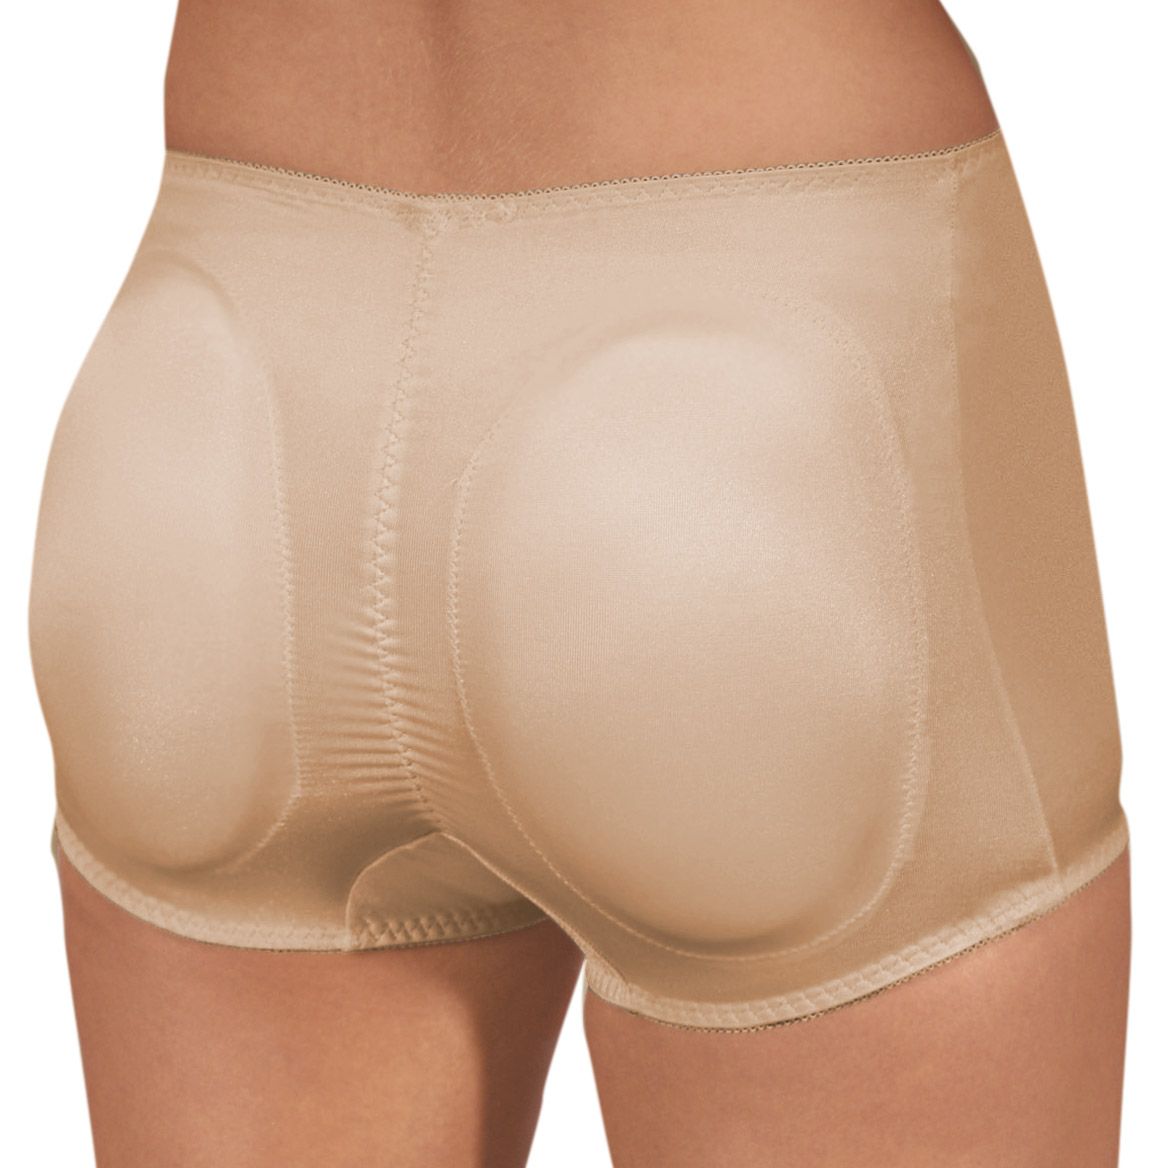 Padded Underwear - Padded Panty - Underwear - Walter Drake